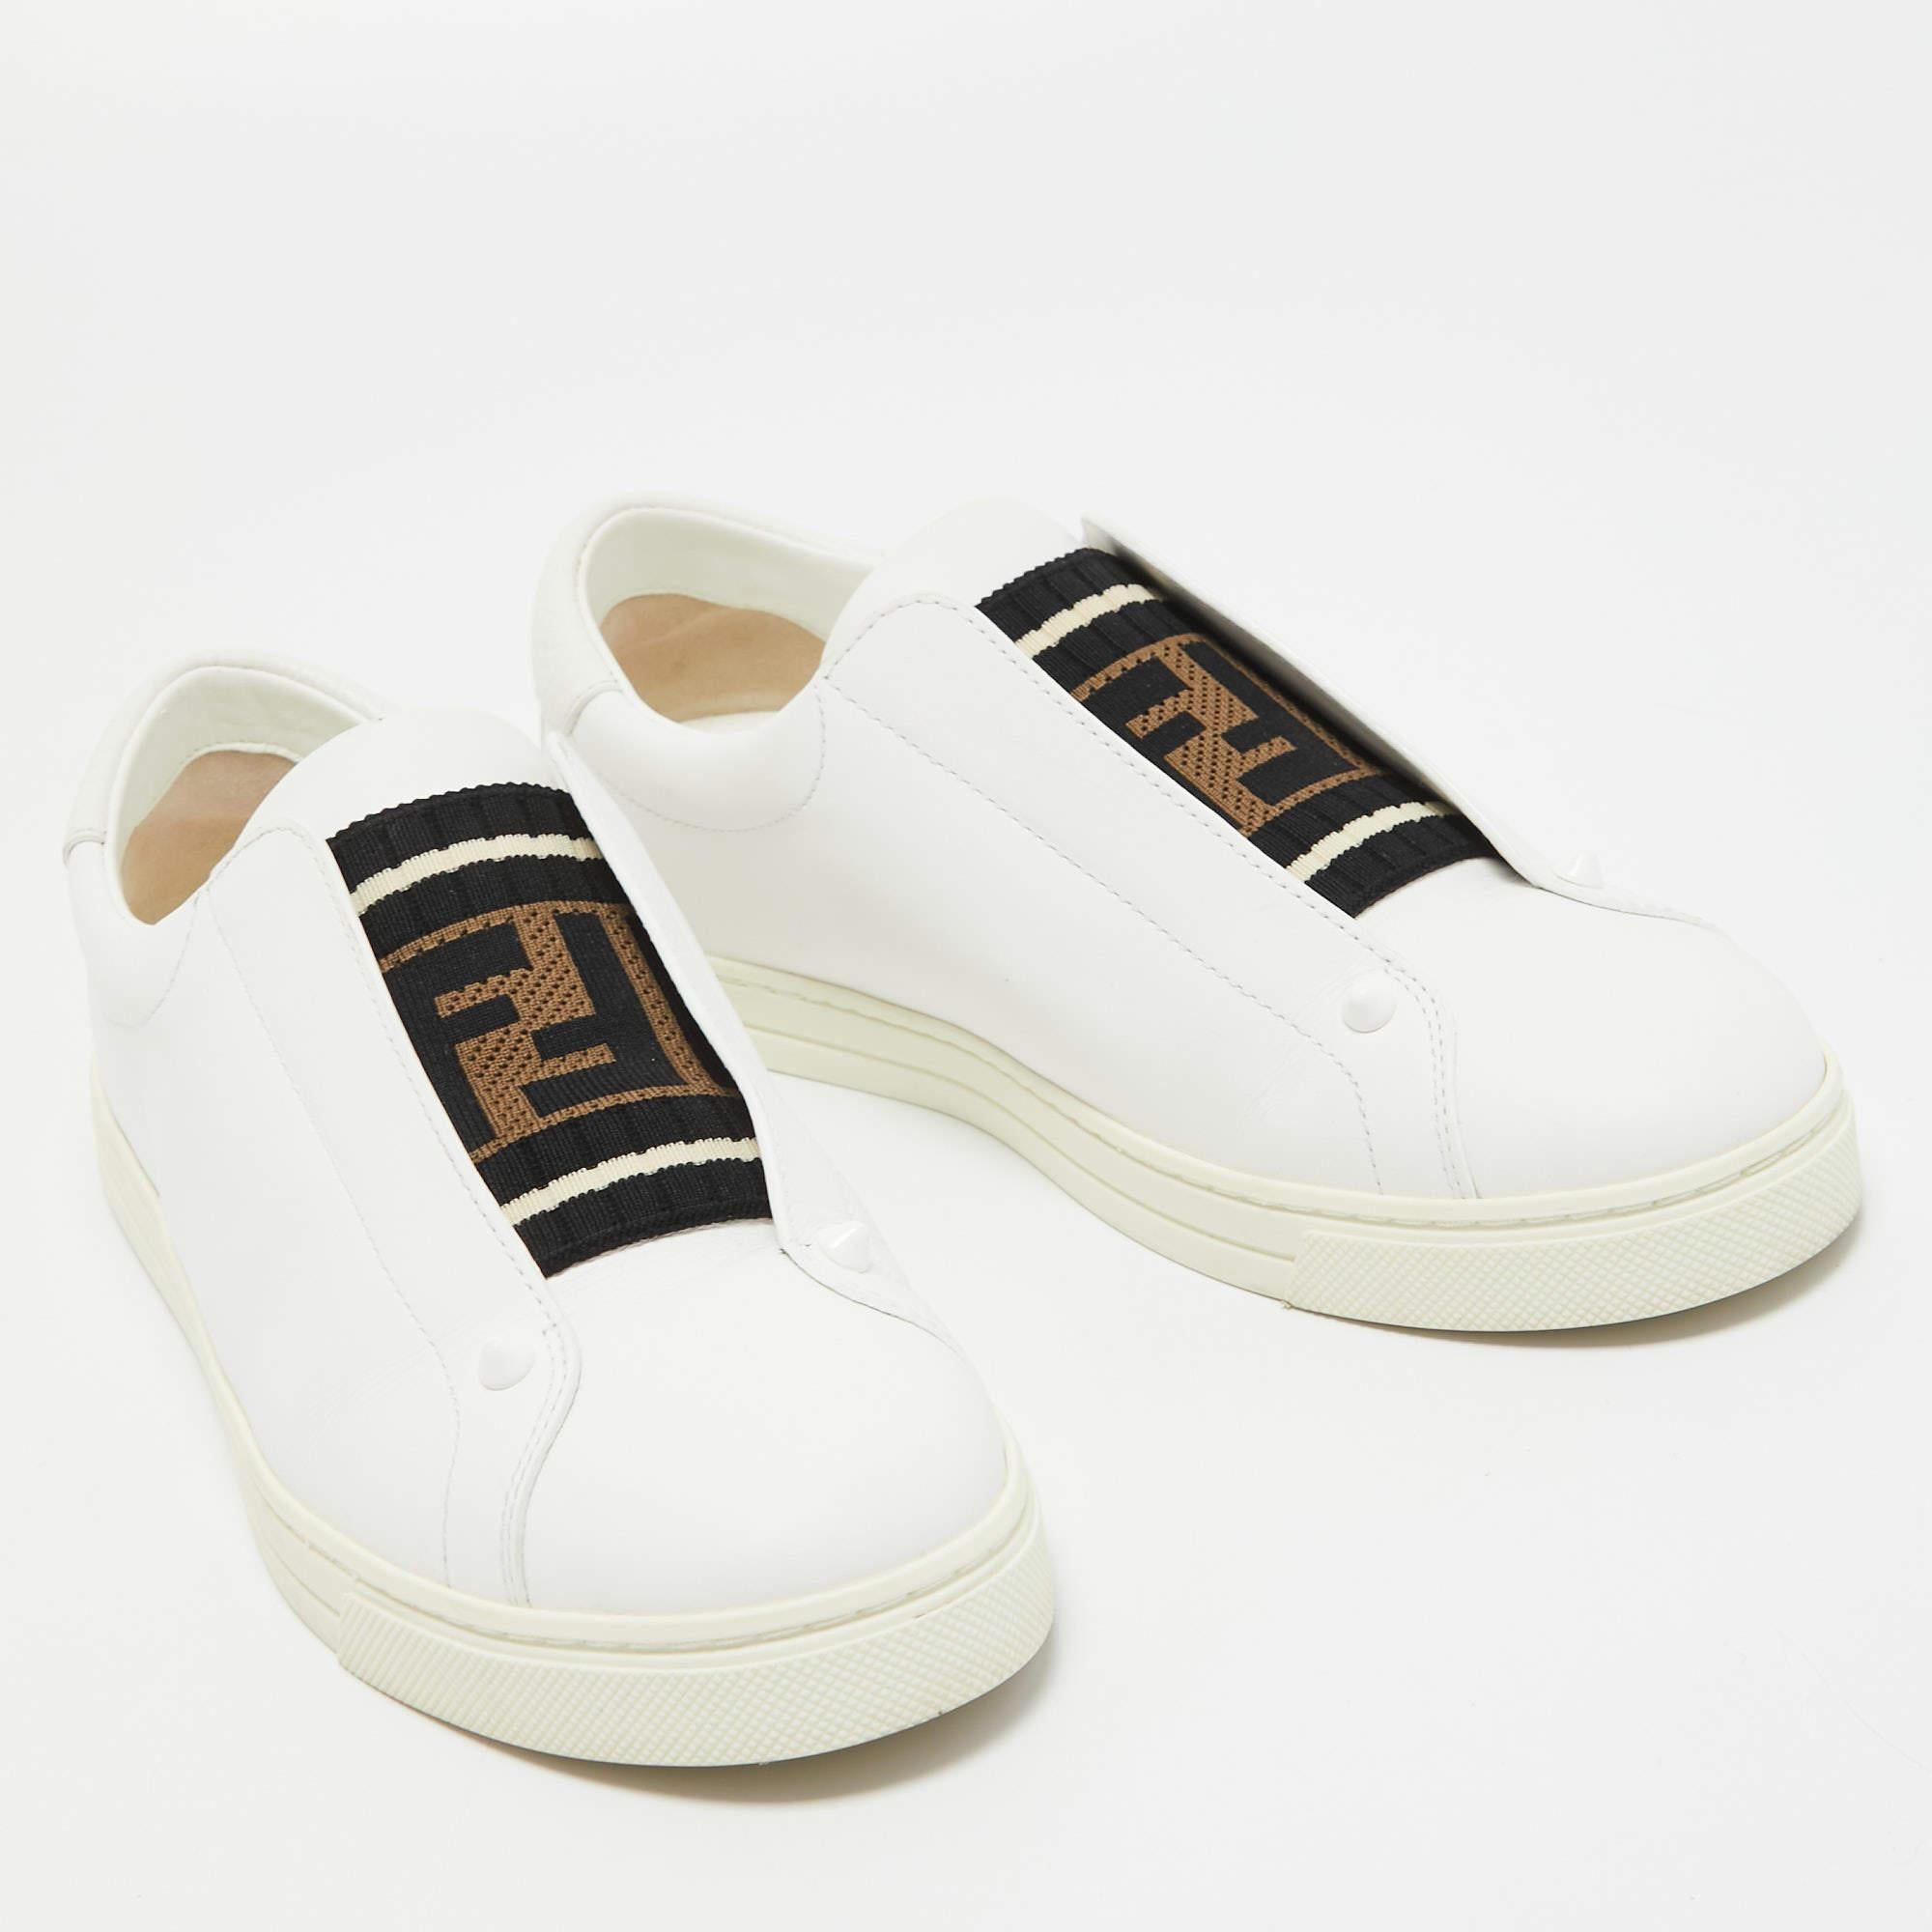 Fendi White Leather and Logo Knit Fabric Rockoko Slip On Sneakers Size 39 1